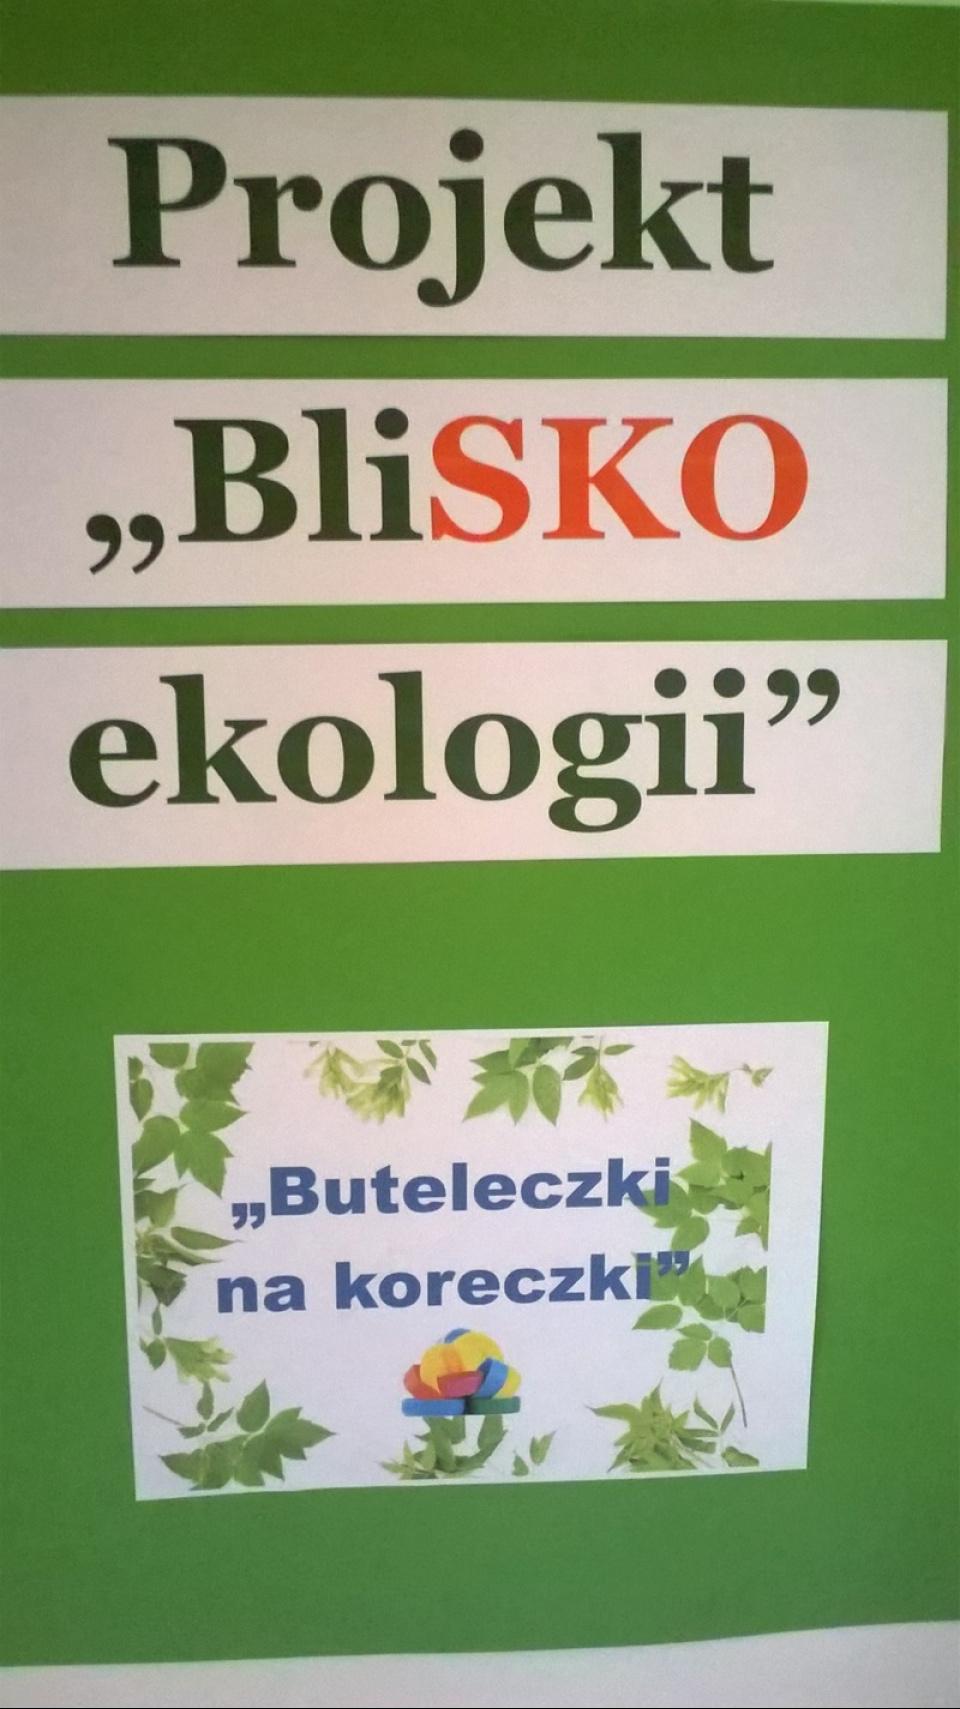 Projekt SKO "BliSKO ekologii" - etap III